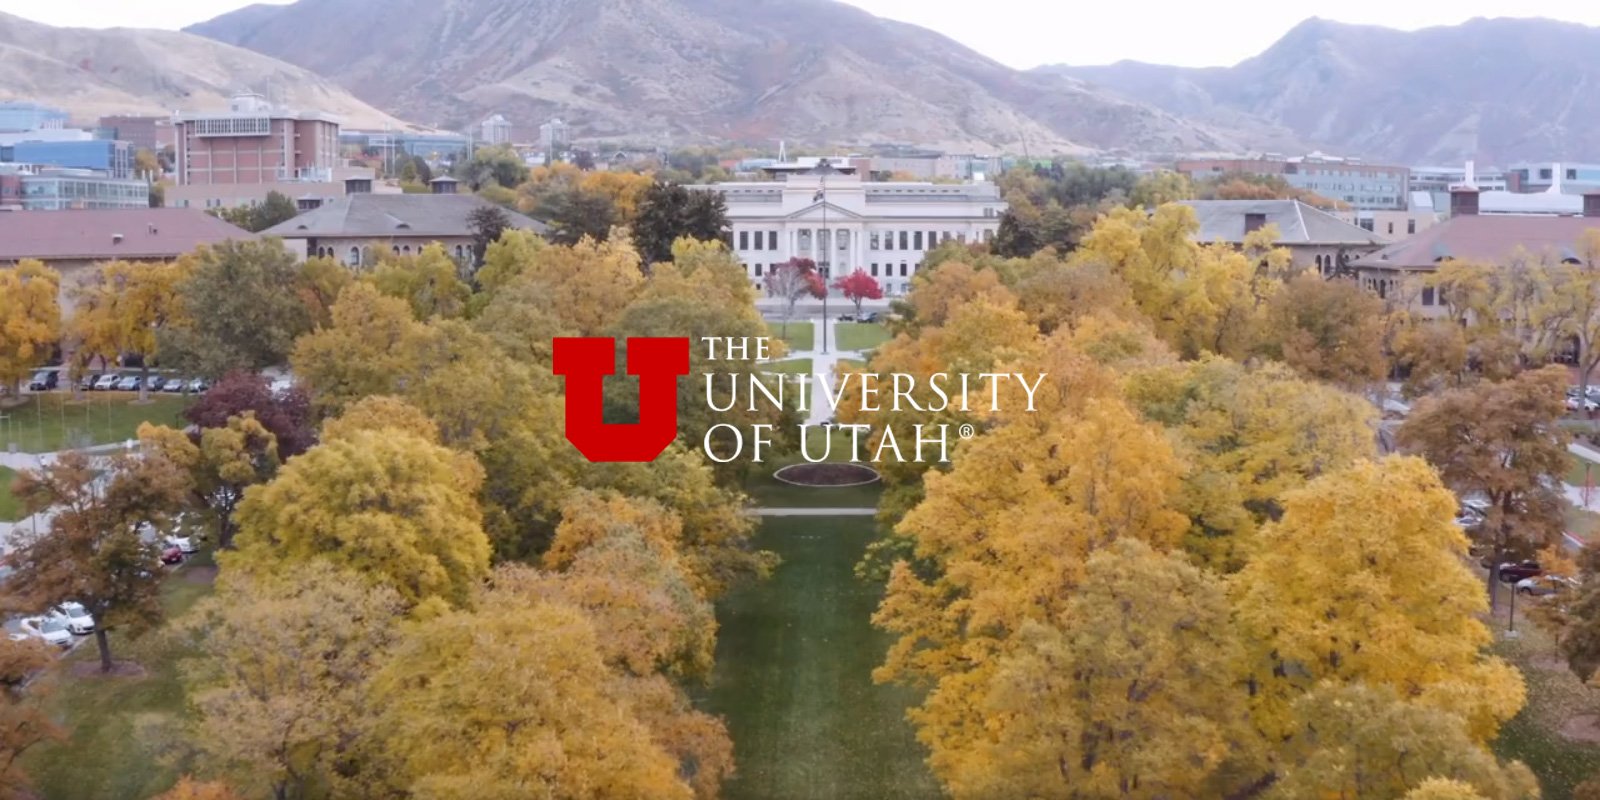 University of Utah hit by ransomware, pays $457,000 ransom